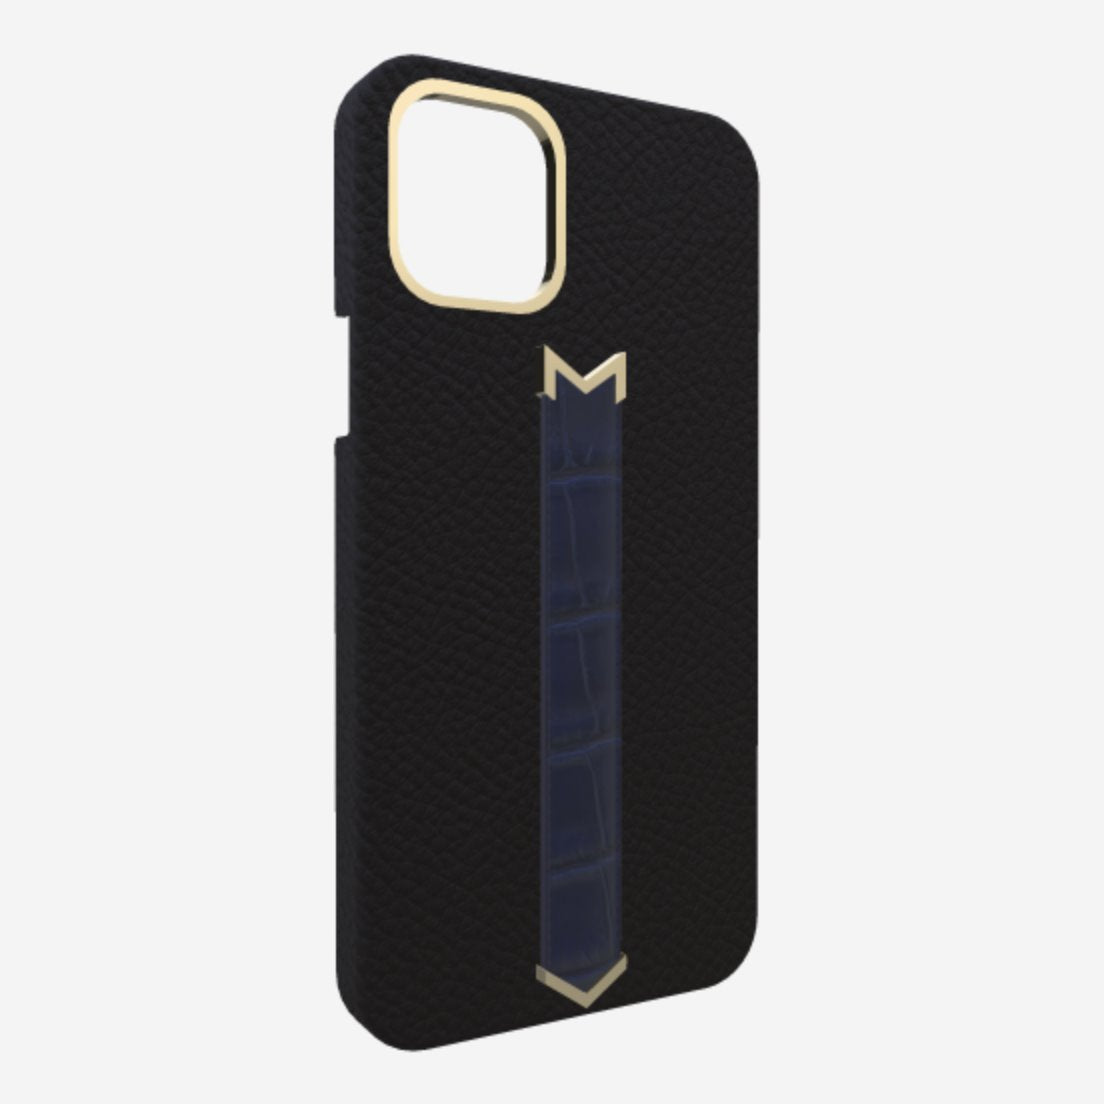 Gold Finger Strap Case for iPhone 13 Pro Max in Genuine Calfskin and Alligator Bond Black Navy Blue 